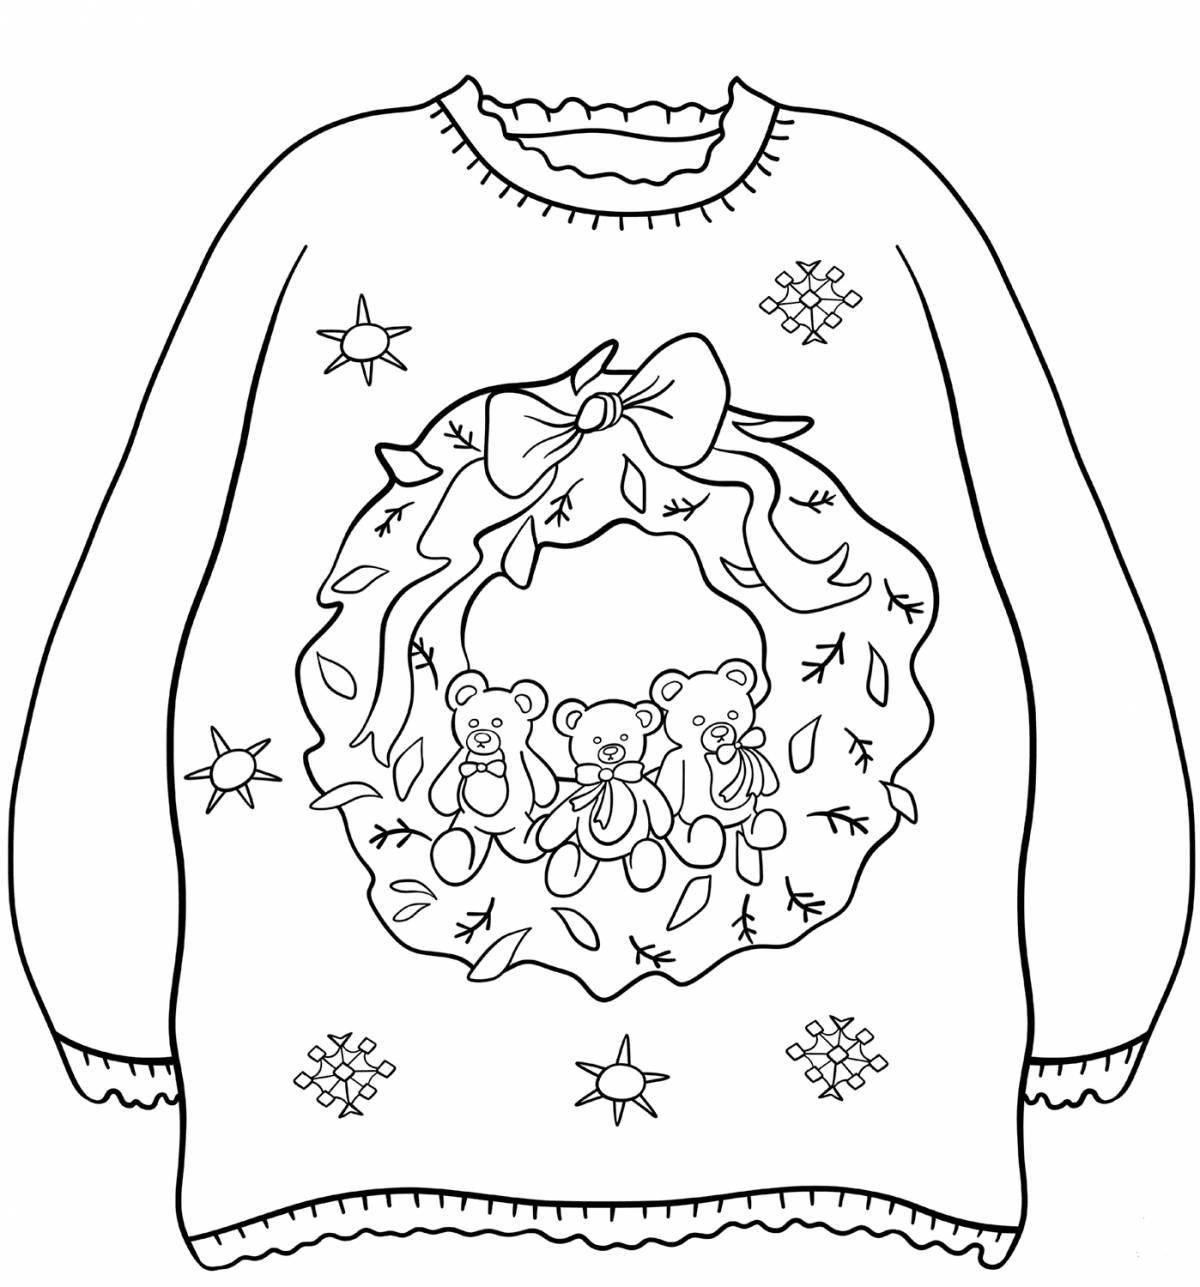 Fun coloring Christmas sweater